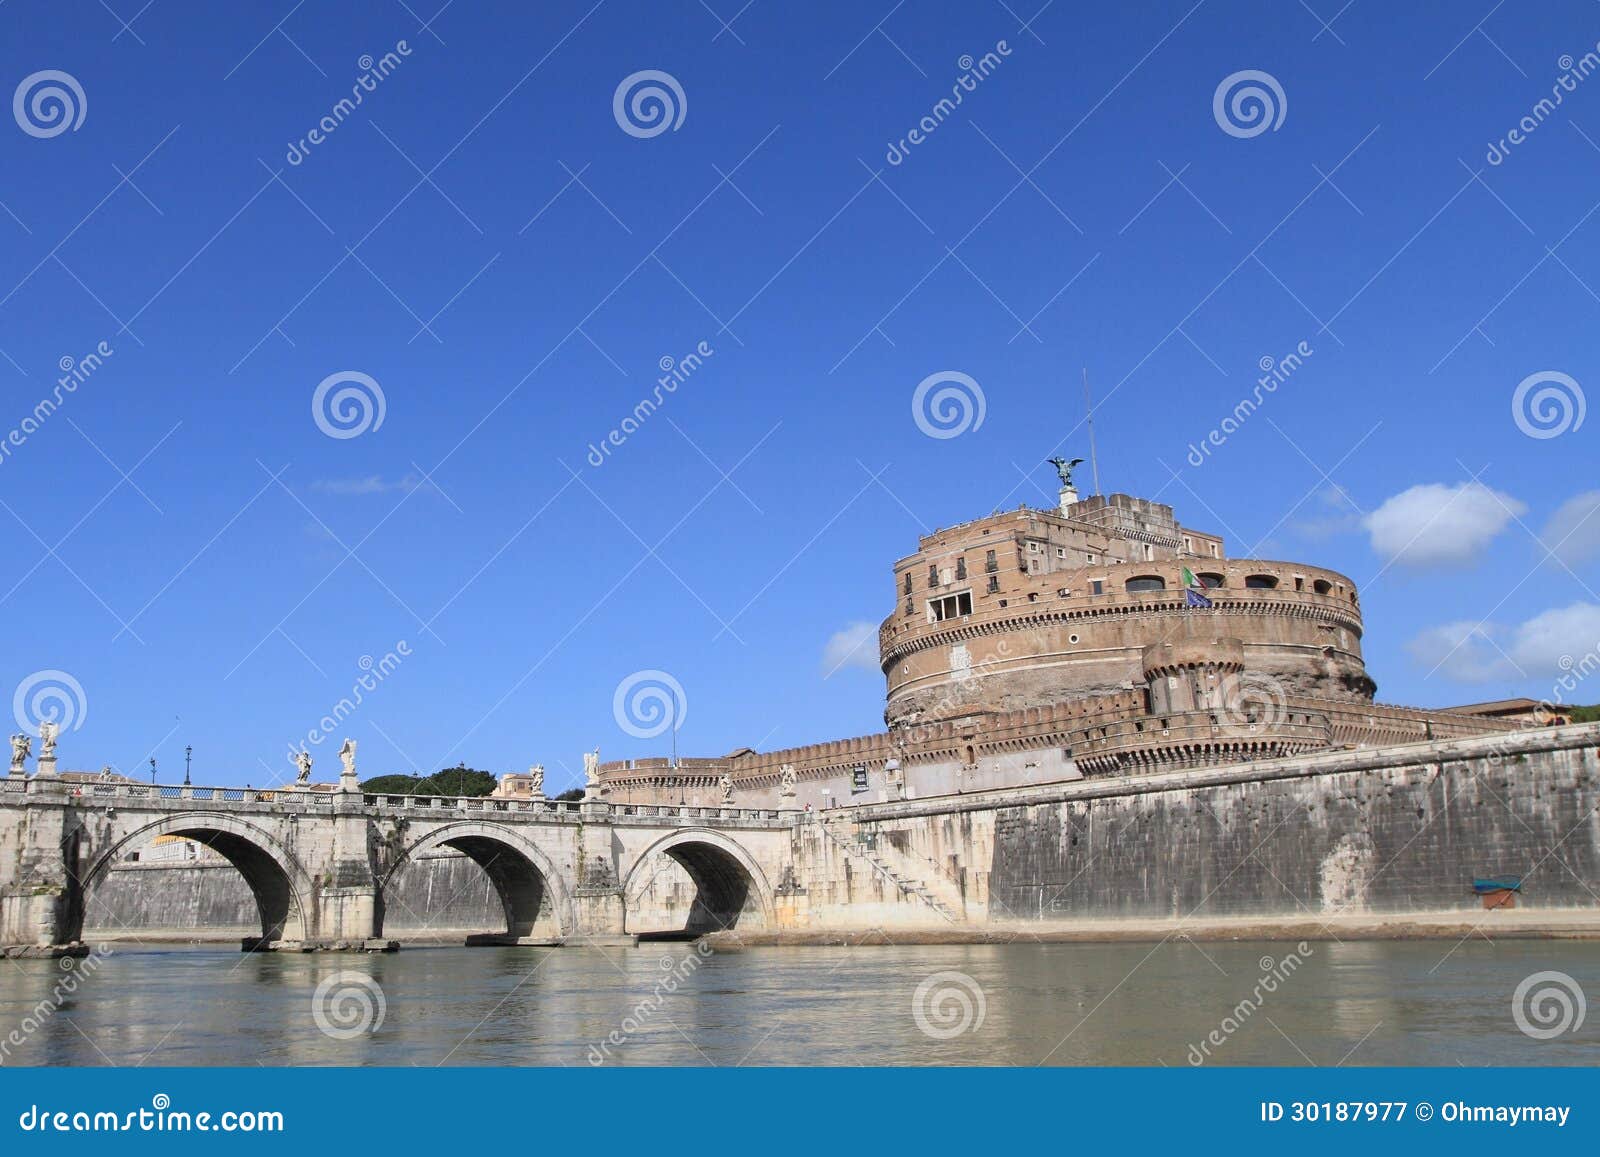 Kasteel en brug op rivier, Rome. Middeleeuws brug en kasteel op Tiber-rivier in Rome